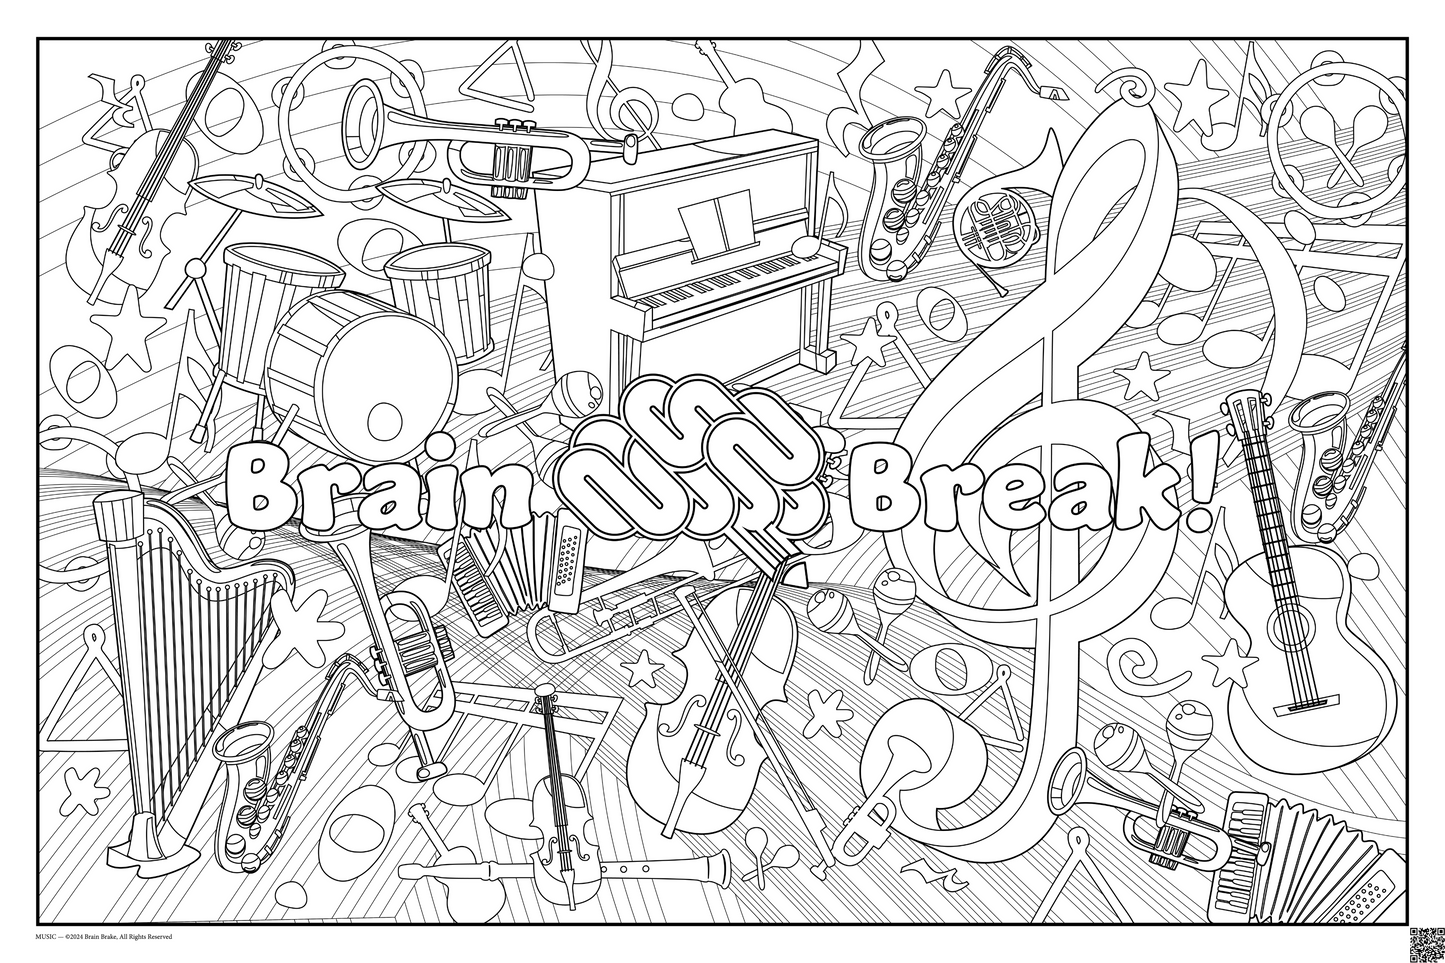 Build Community: Brain Break